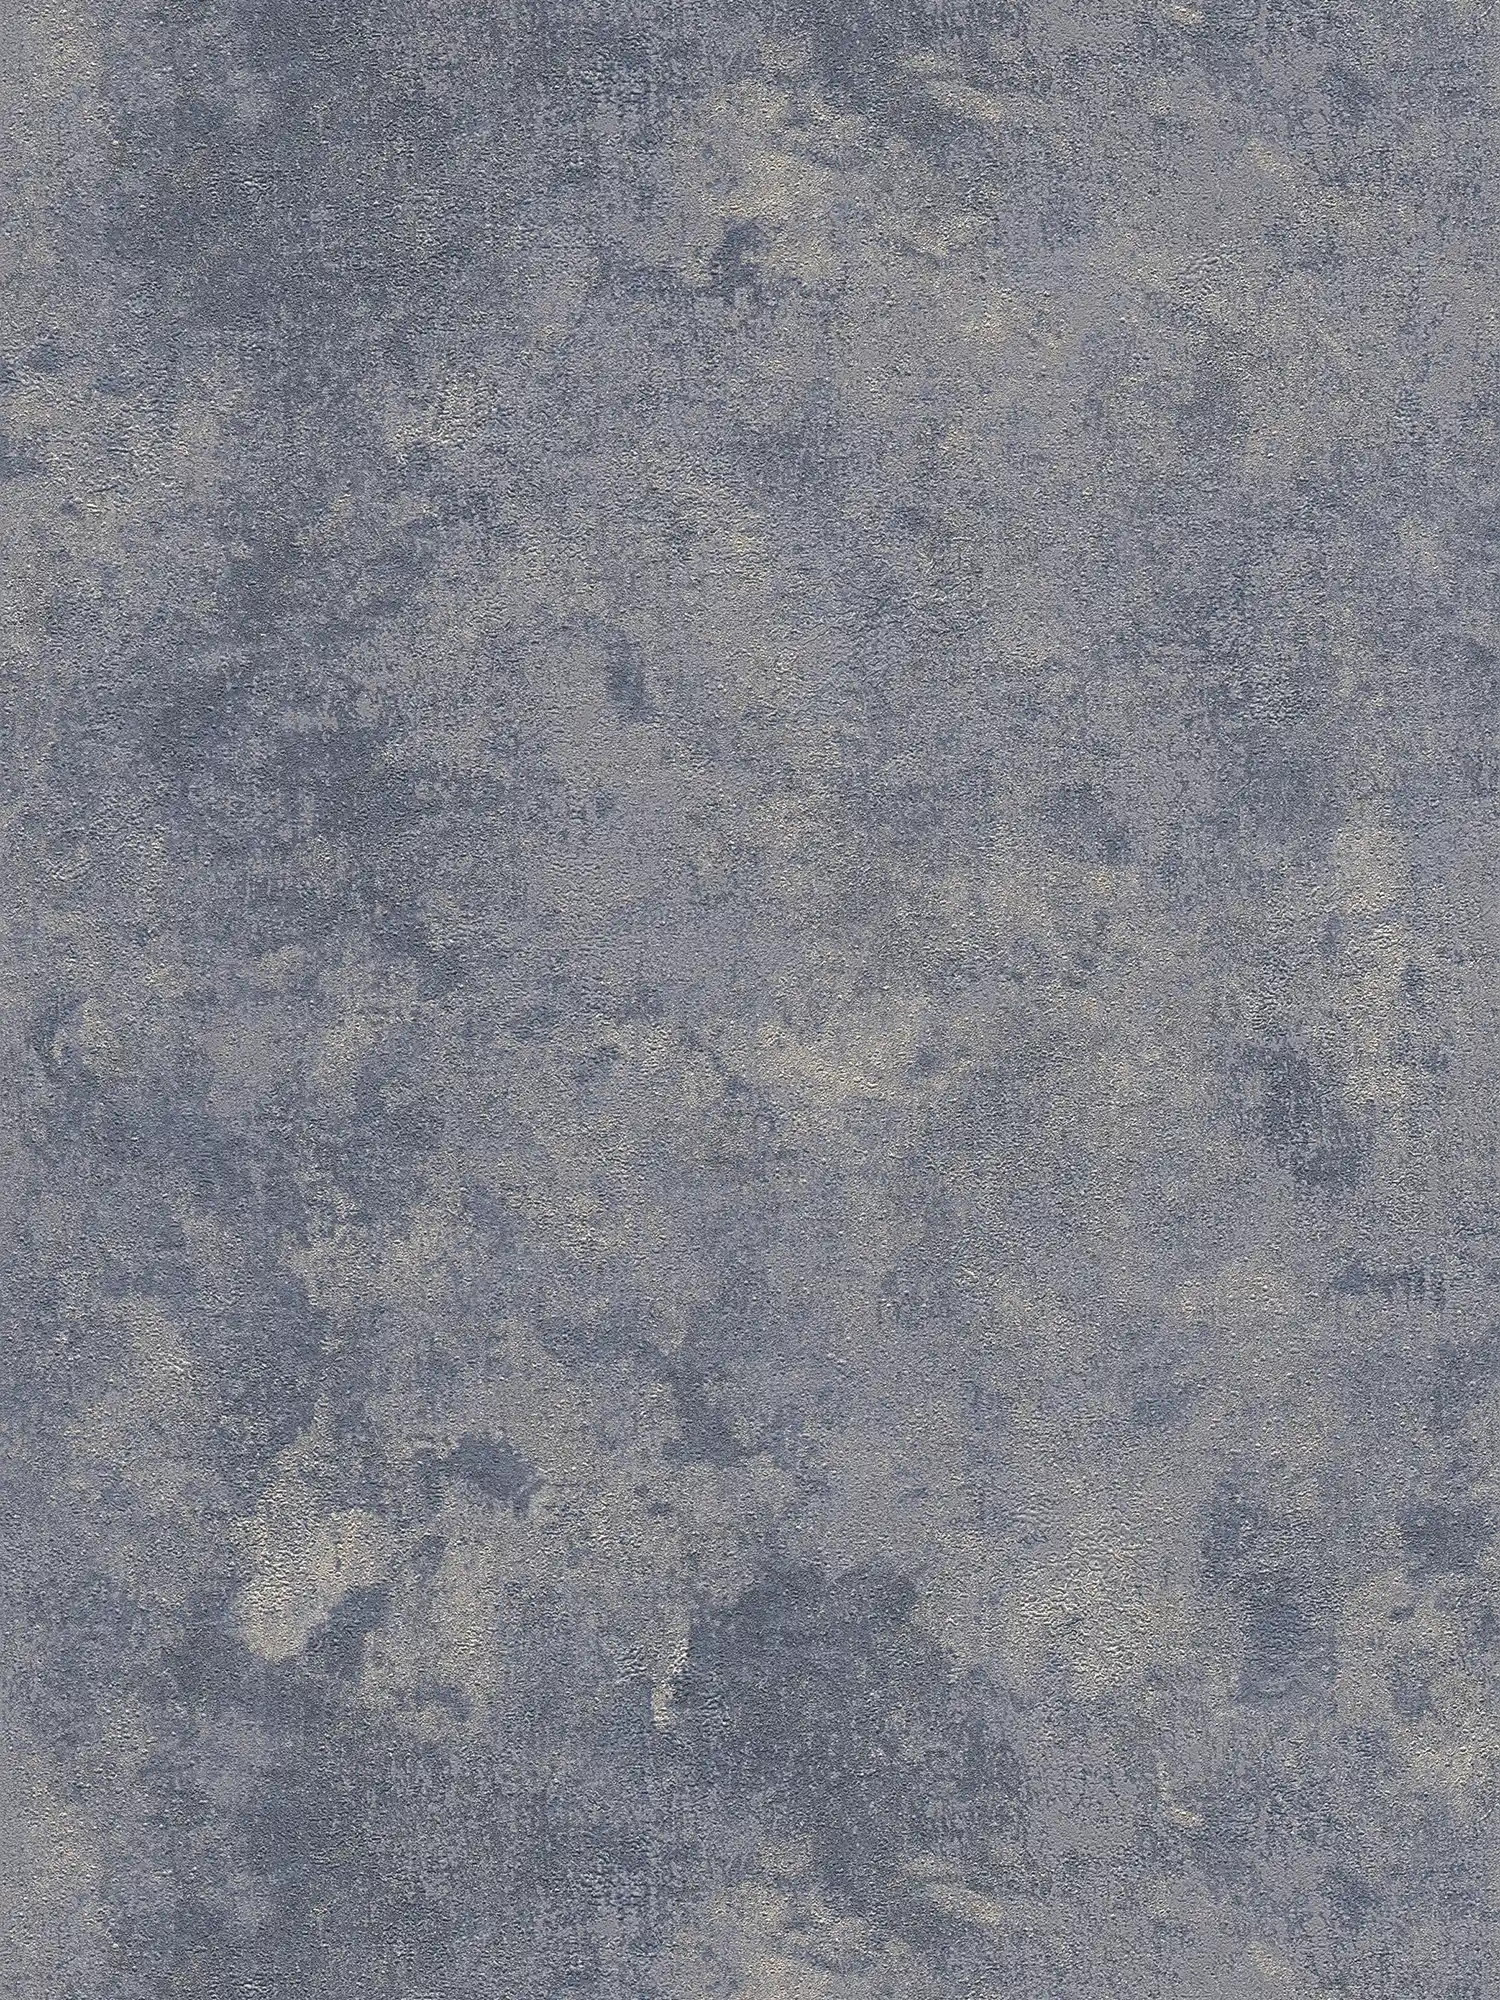 wallpaper rough structure & gloss effect - blue, silver, grey
